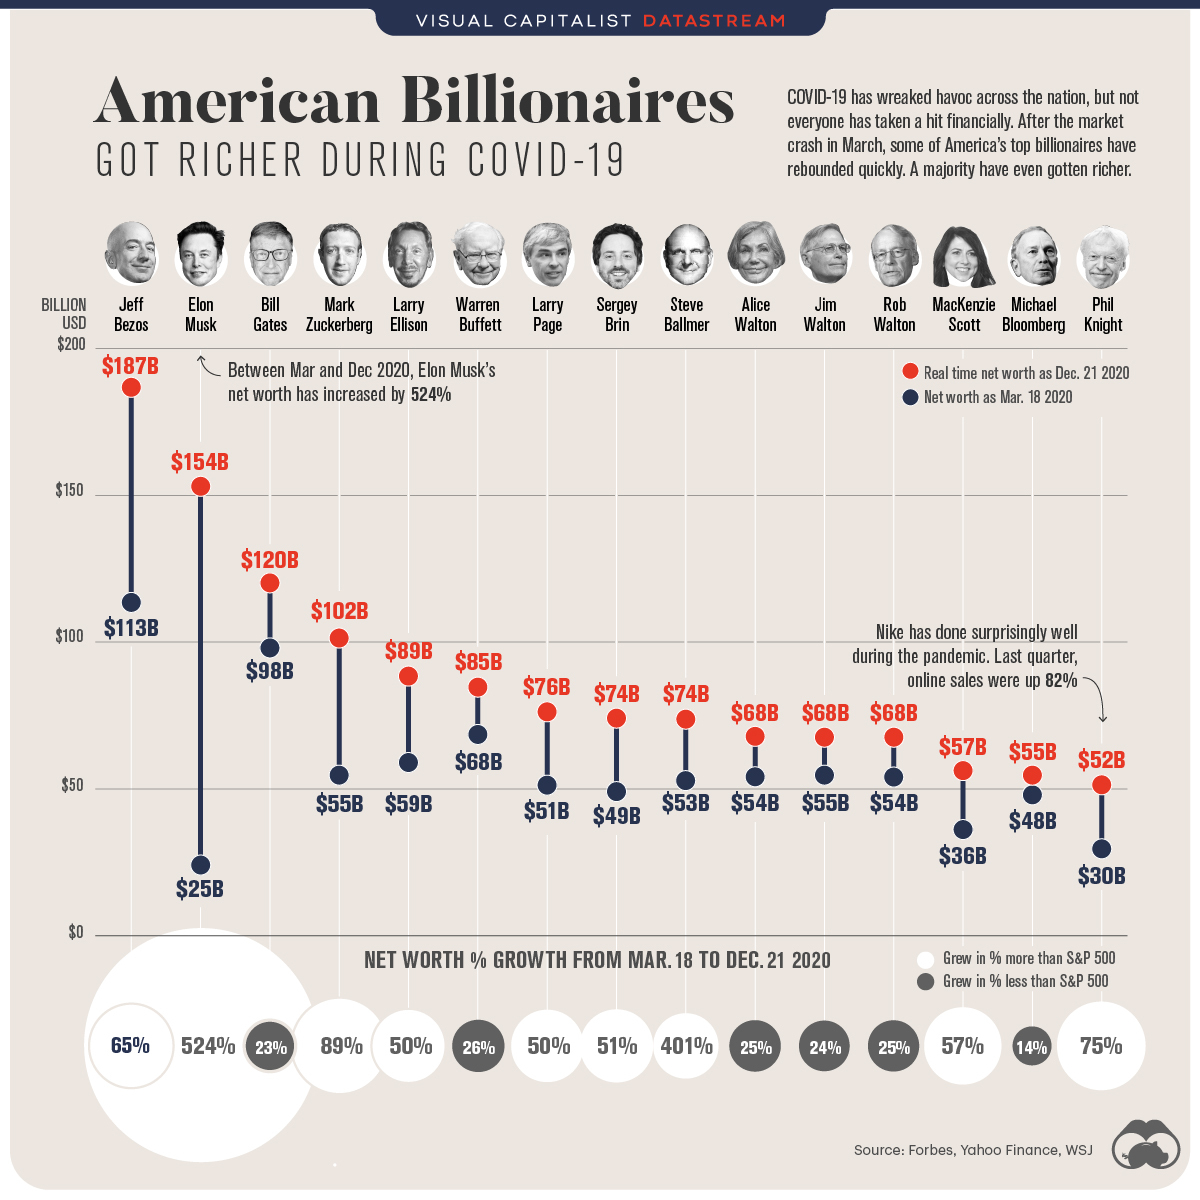 American Billionaires During COVID